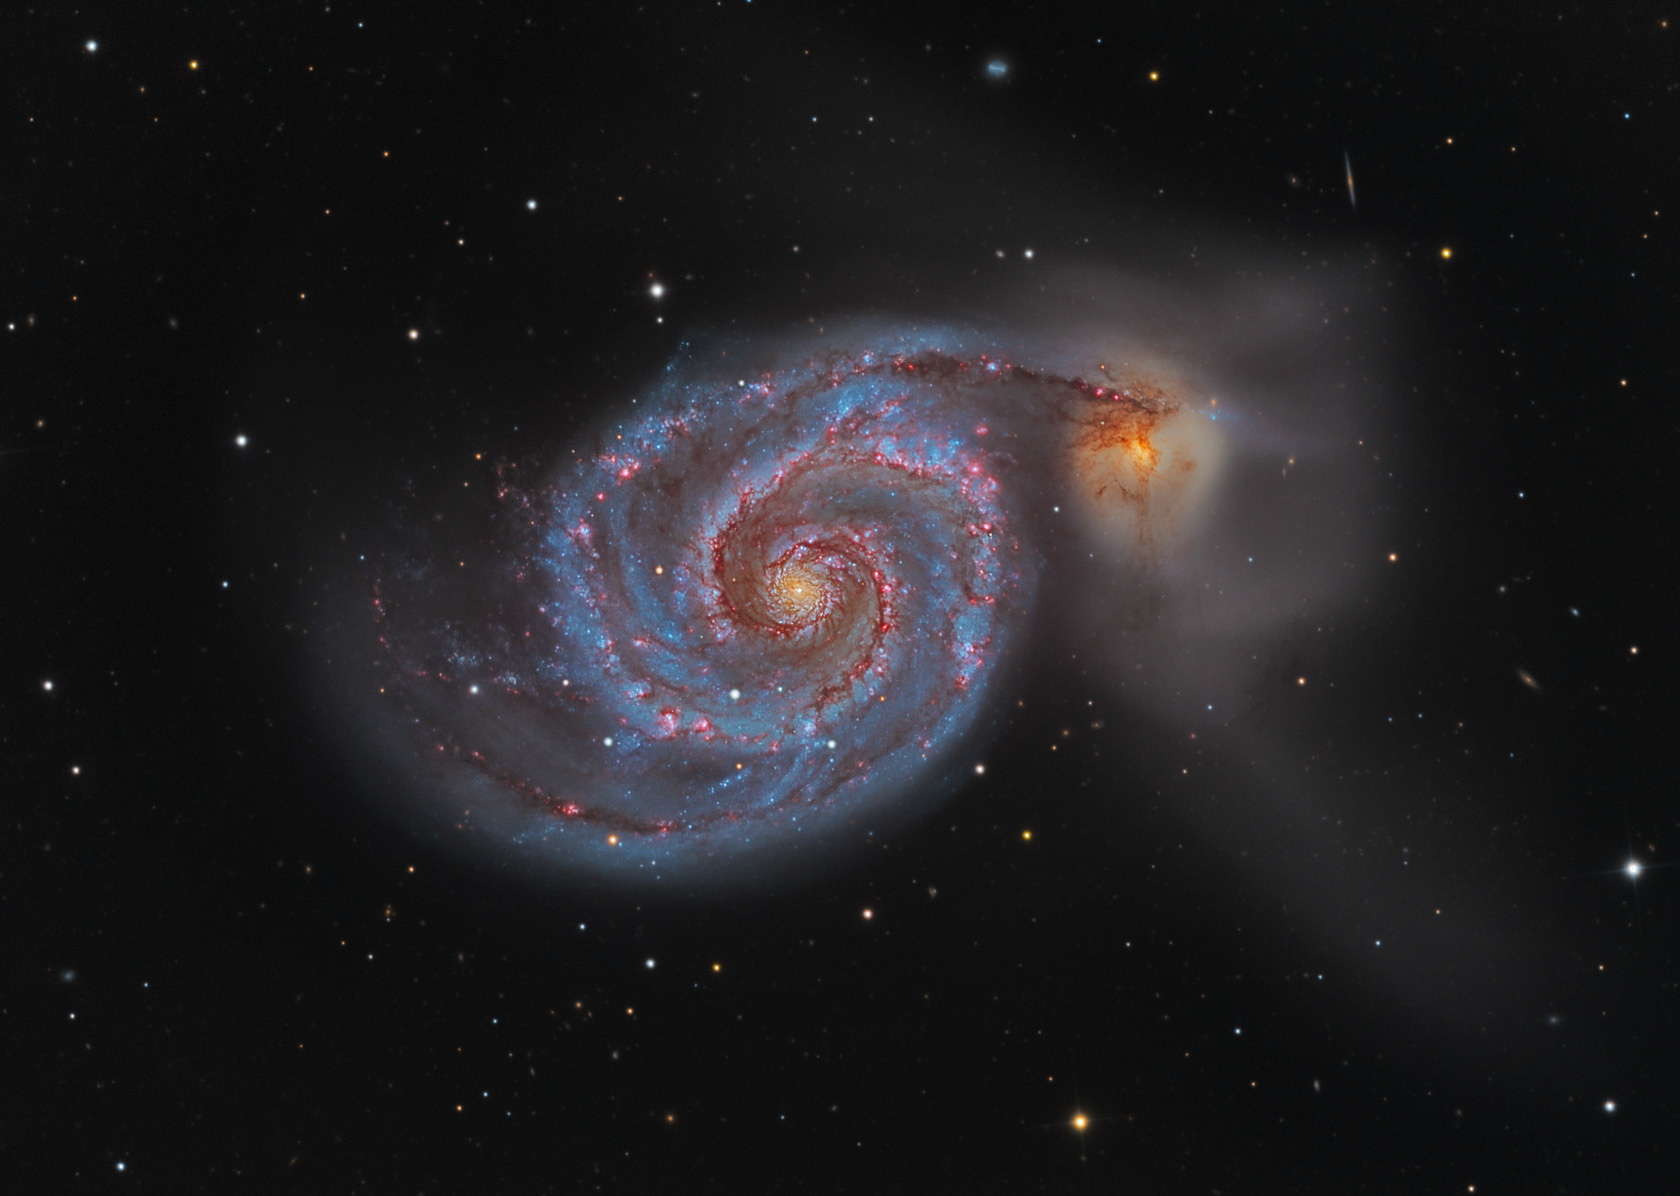 The Whirlpool Galaxy, M51